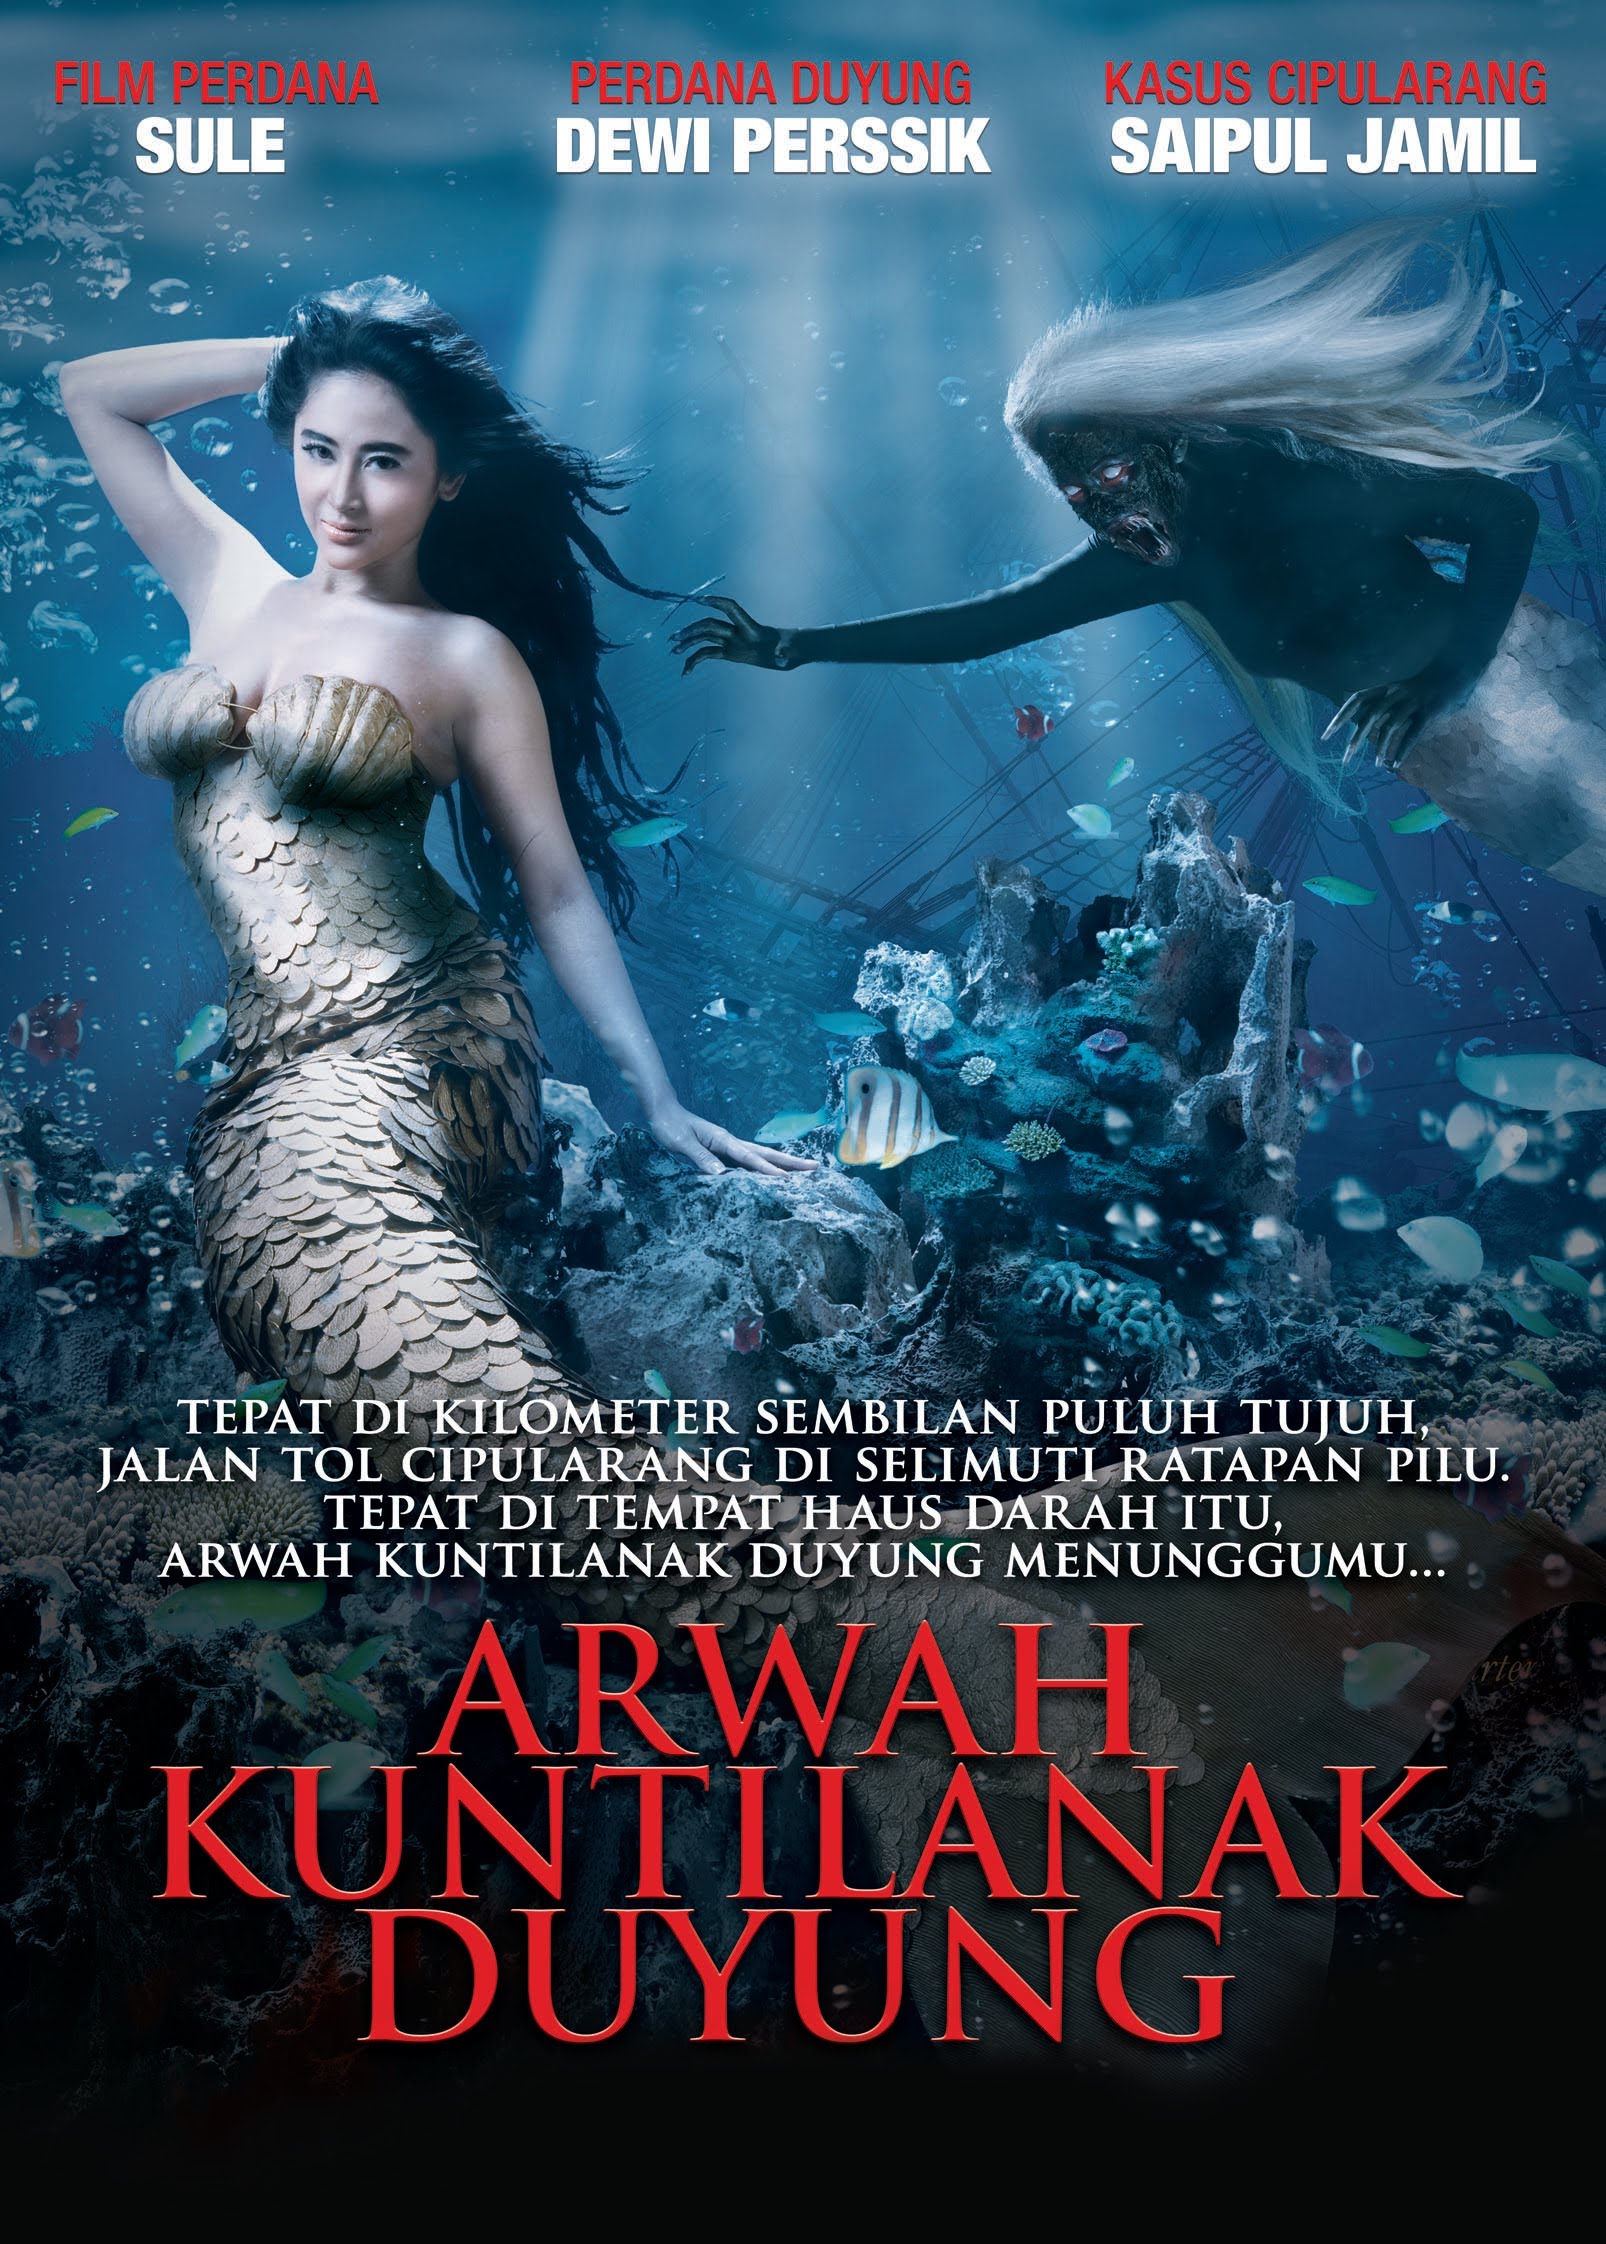 Arwah kuntilanak duyung (2011) with English Subtitles on DVD on DVD